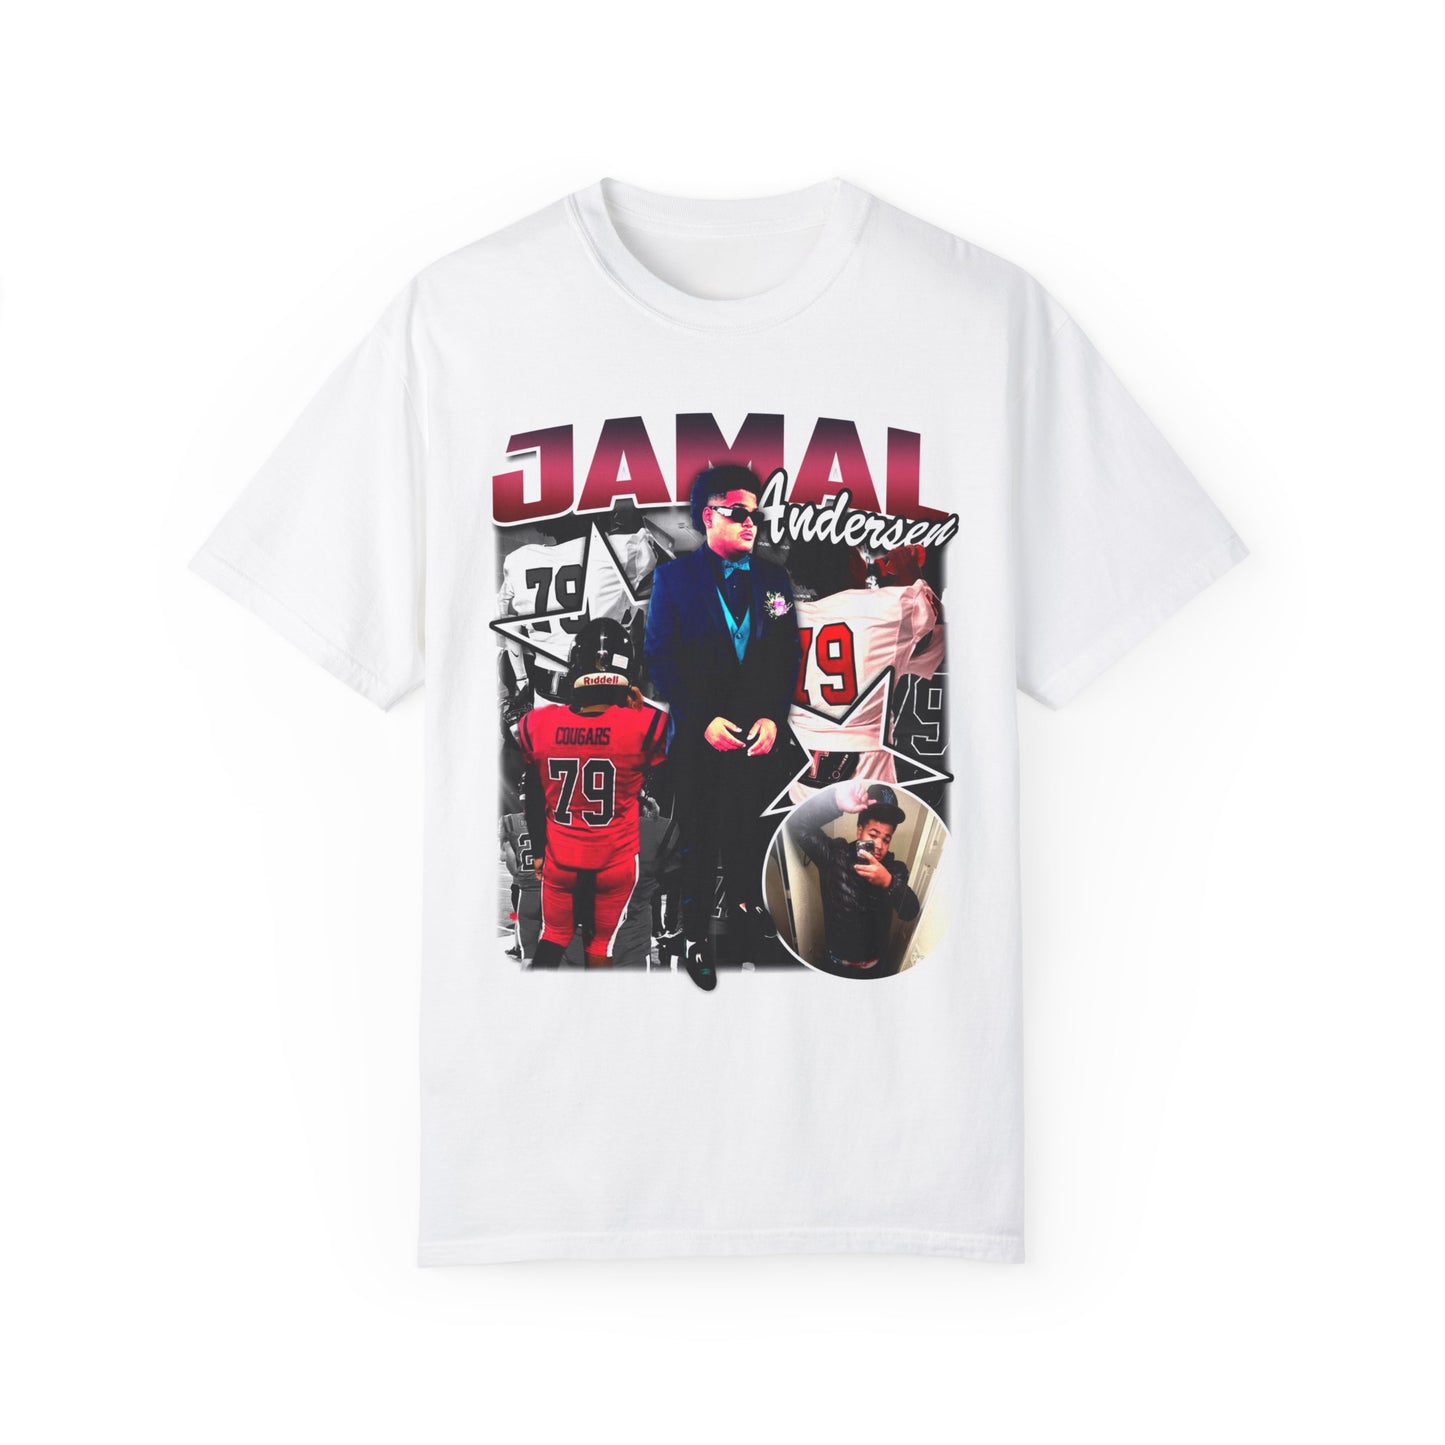 Jamal Andersen Graphic T-shirt